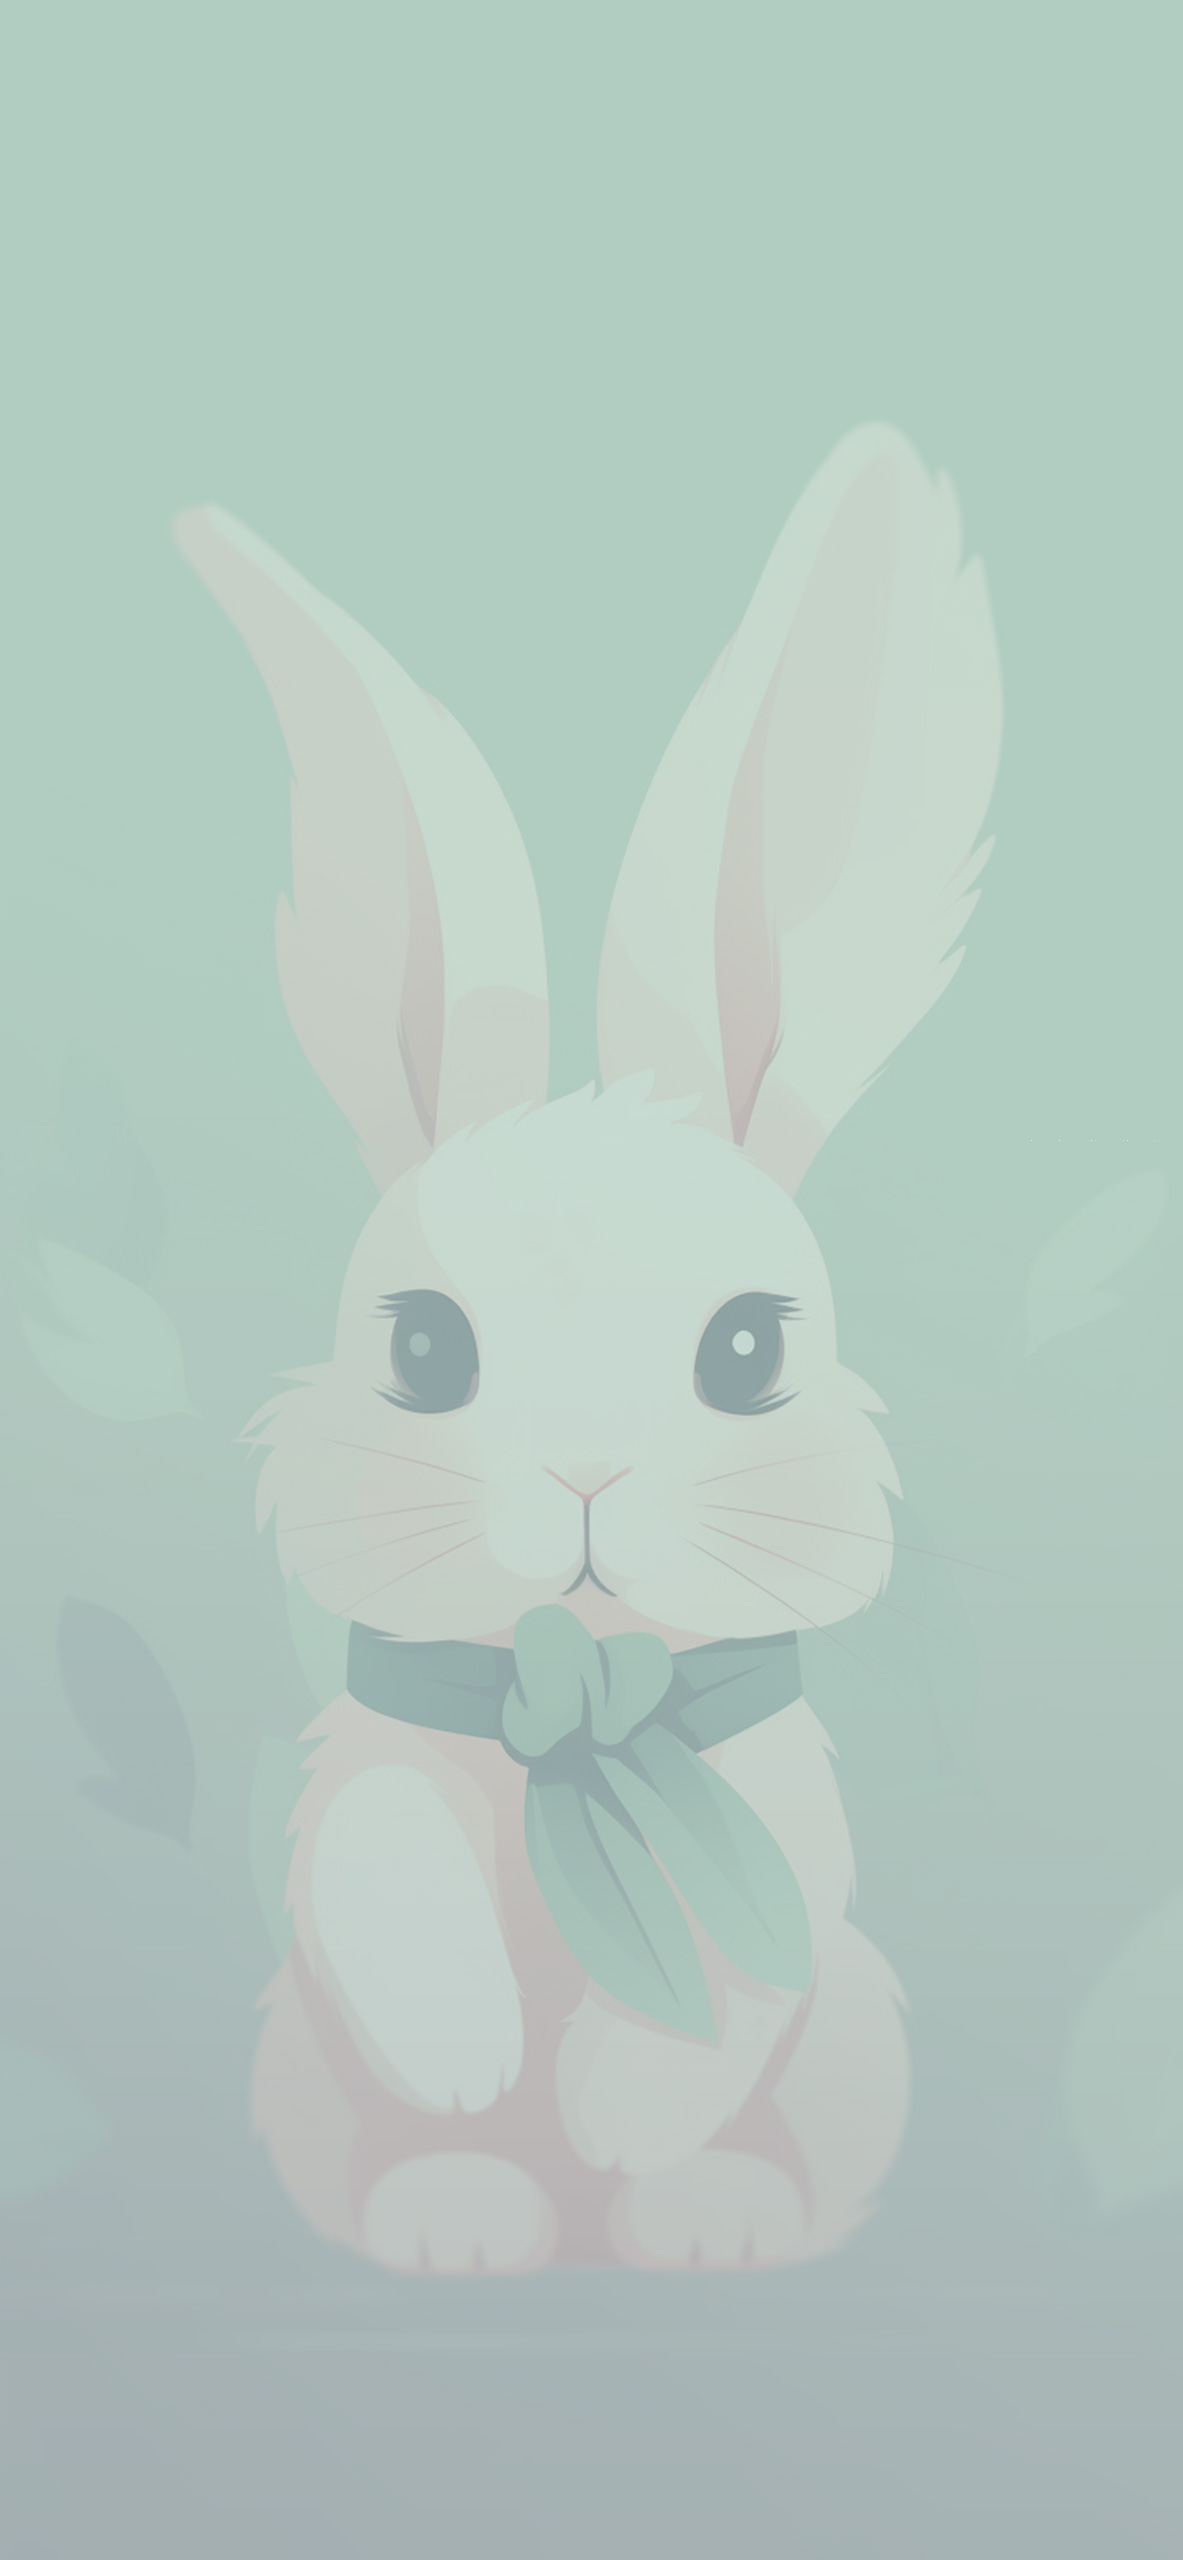 27 Cute White Baby Rabbit Wallpaper  WallpaperSafari